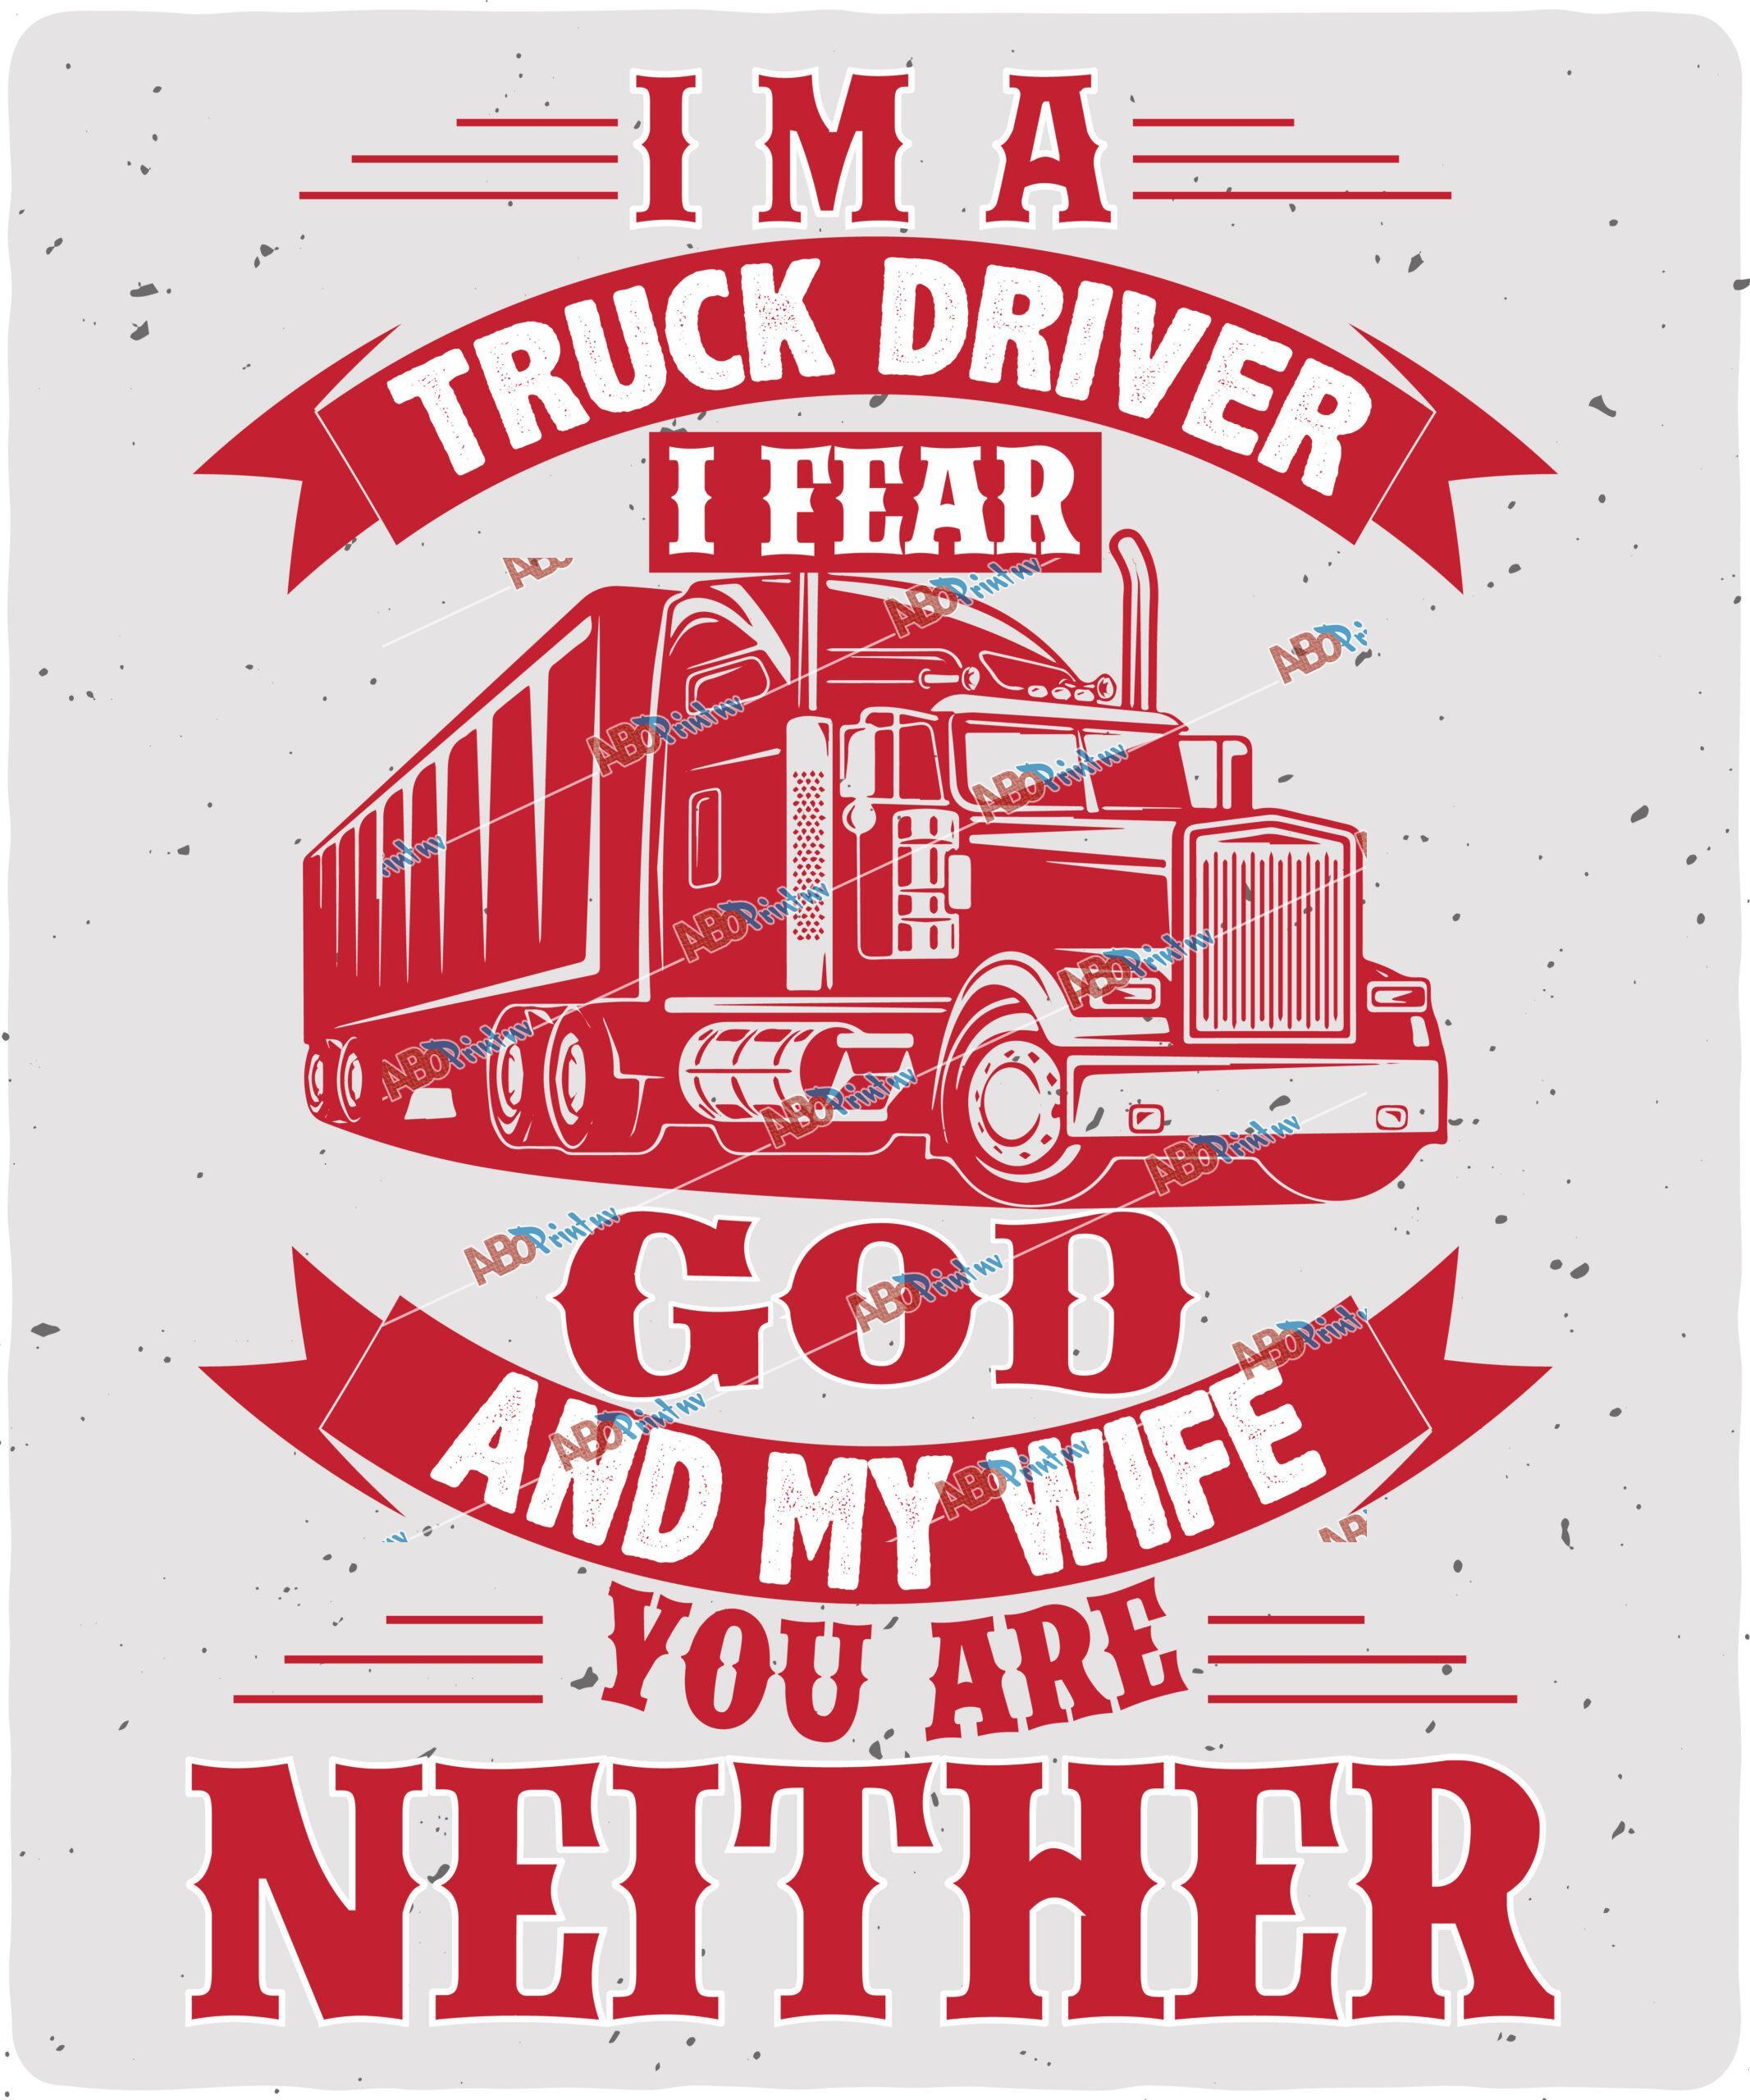 I'm a truck driver i fear god